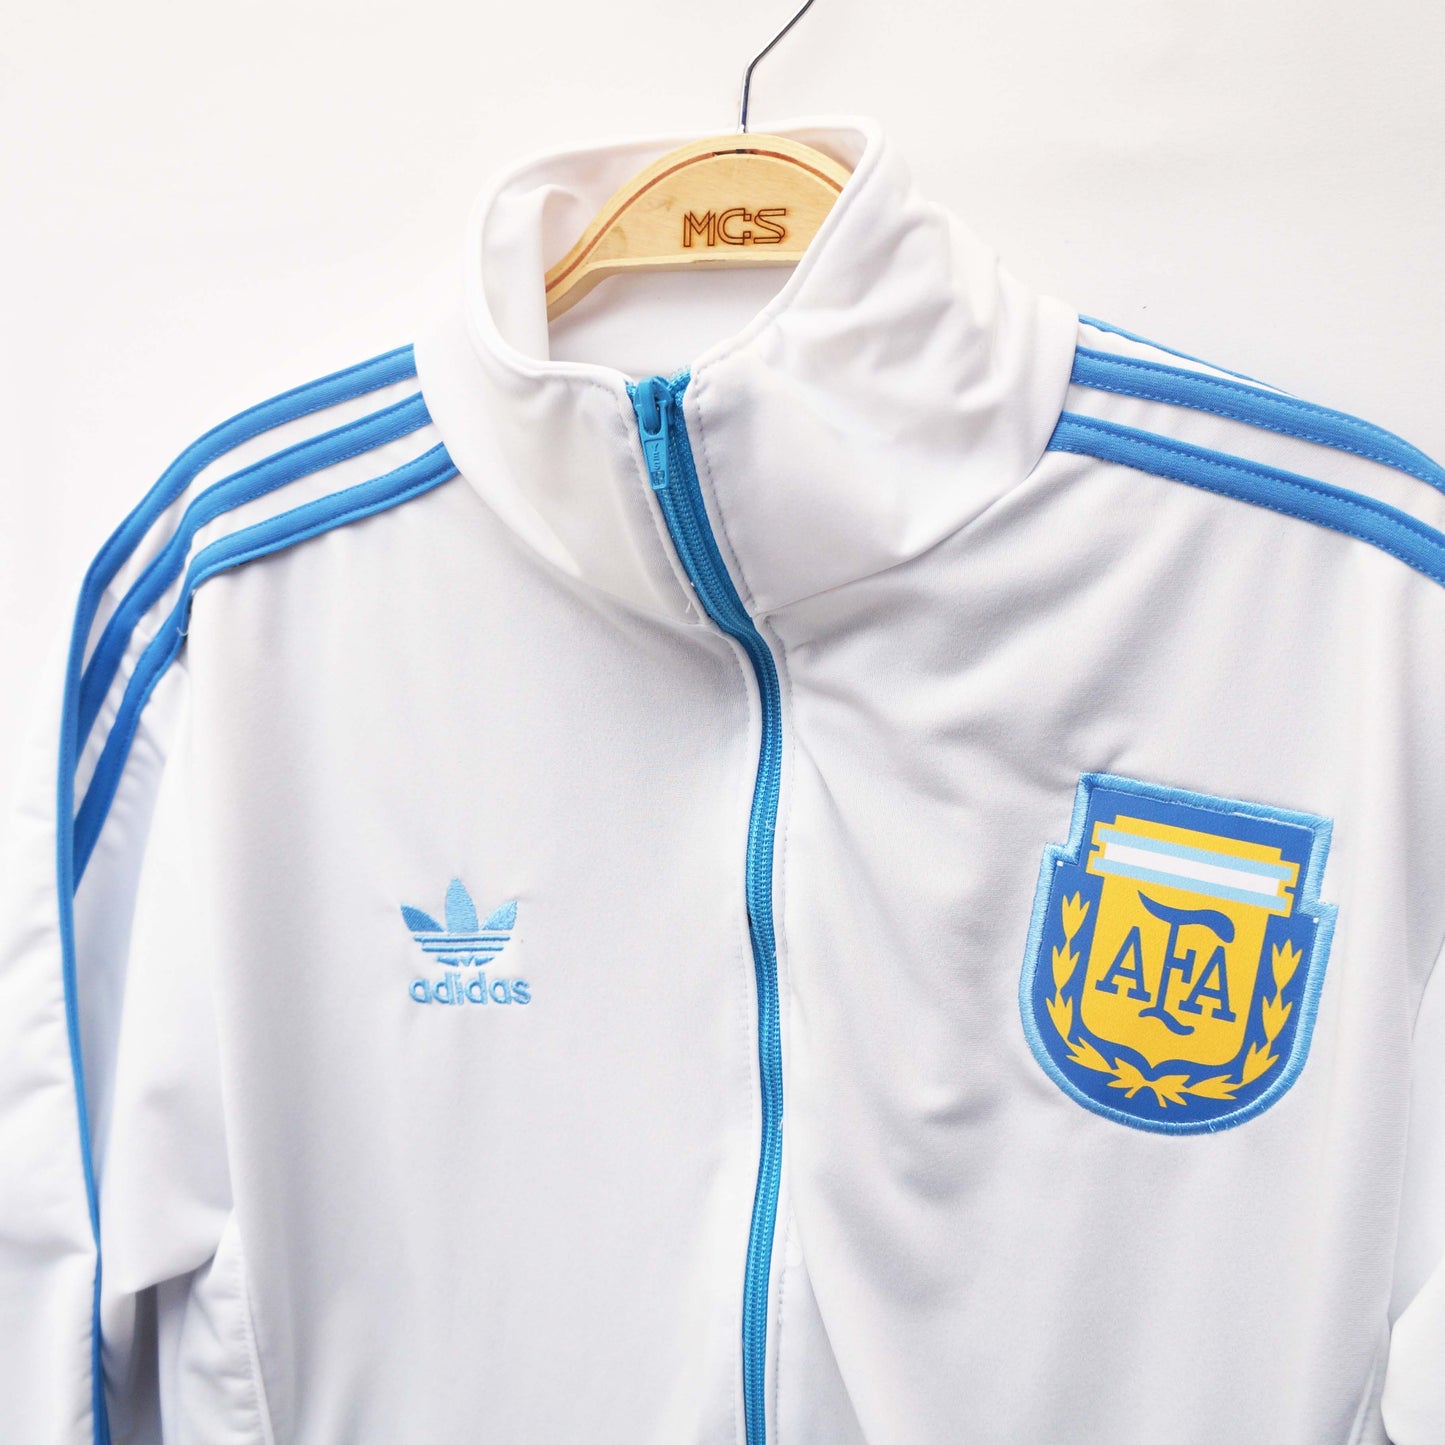 Light blue white Argentine jacket